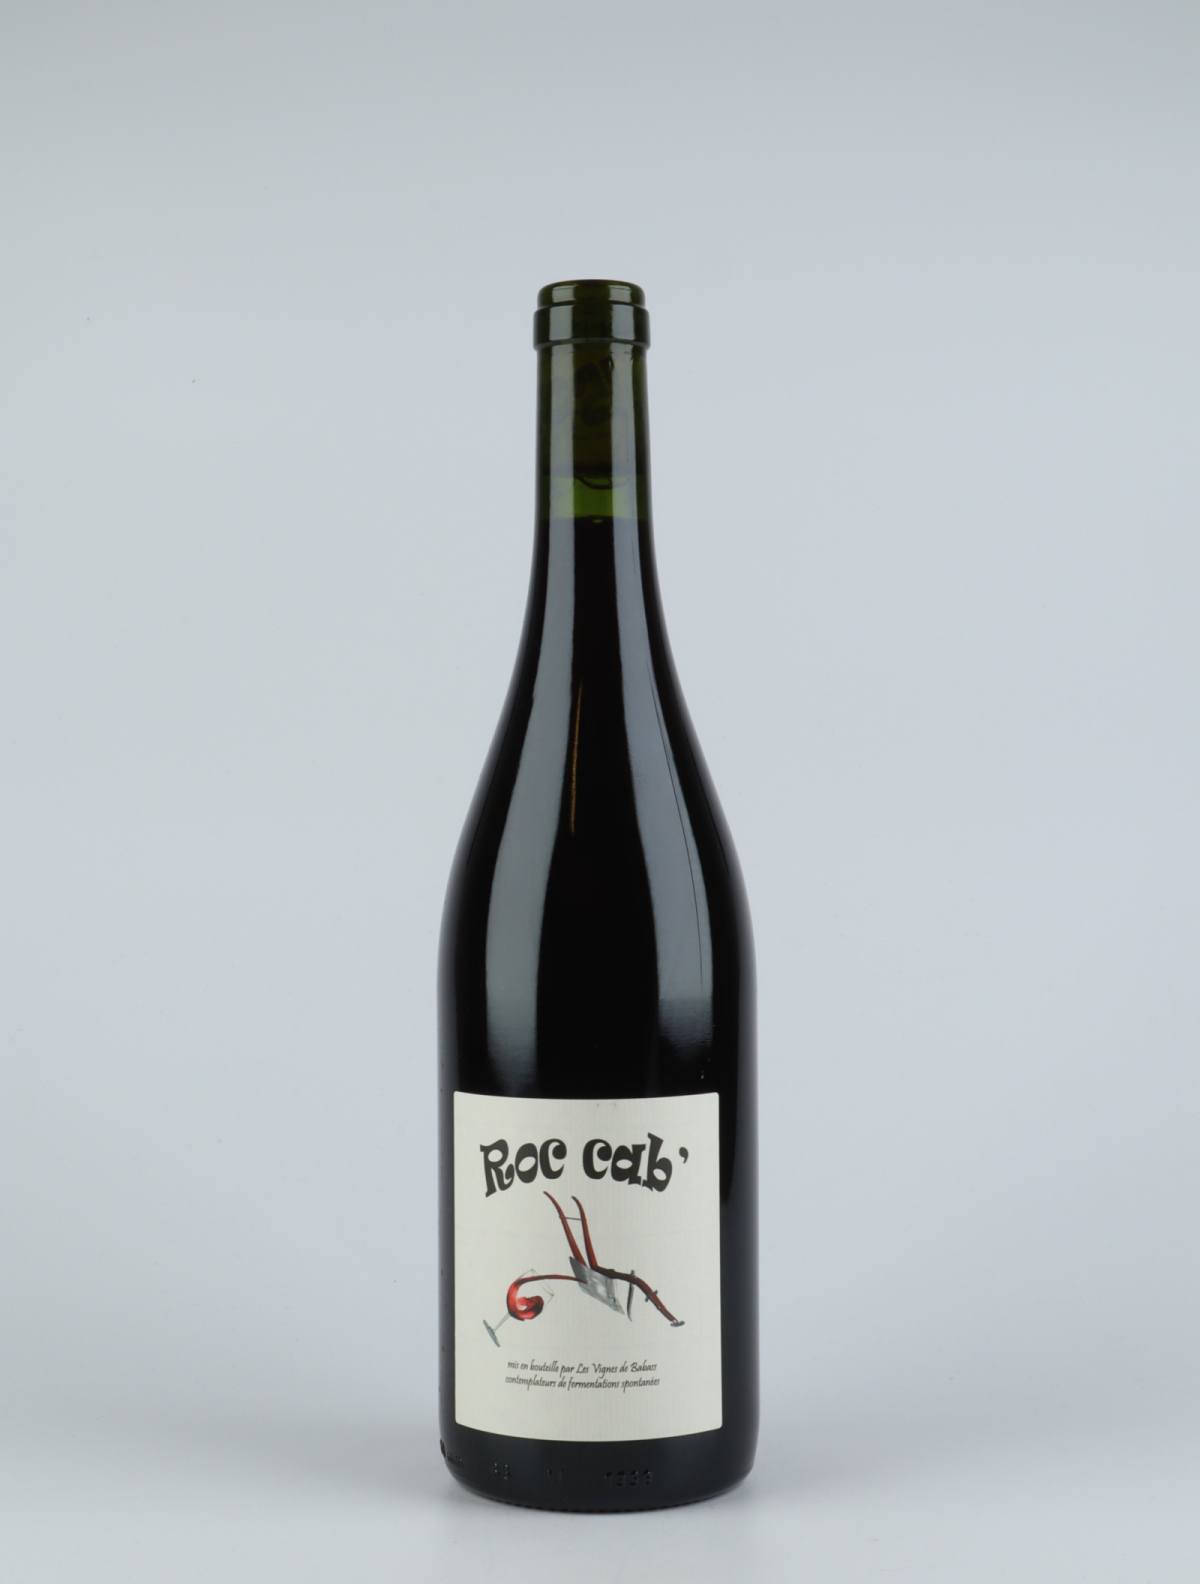 A bottle 2018 Roc Cab Red wine from Les Vignes de Babass, Loire in France